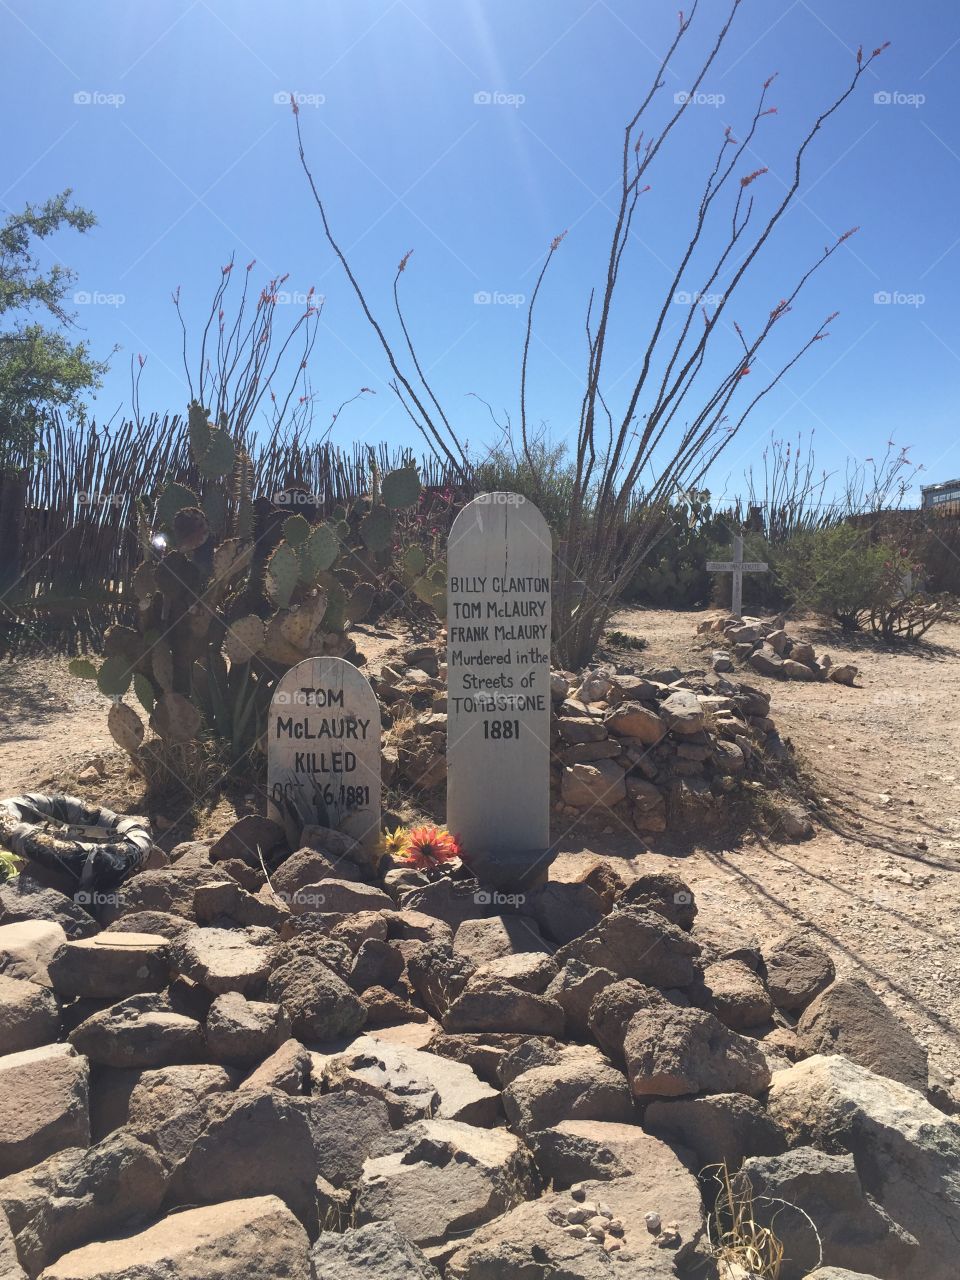 Boot Hill graveyard. Tombstone, Arizona 